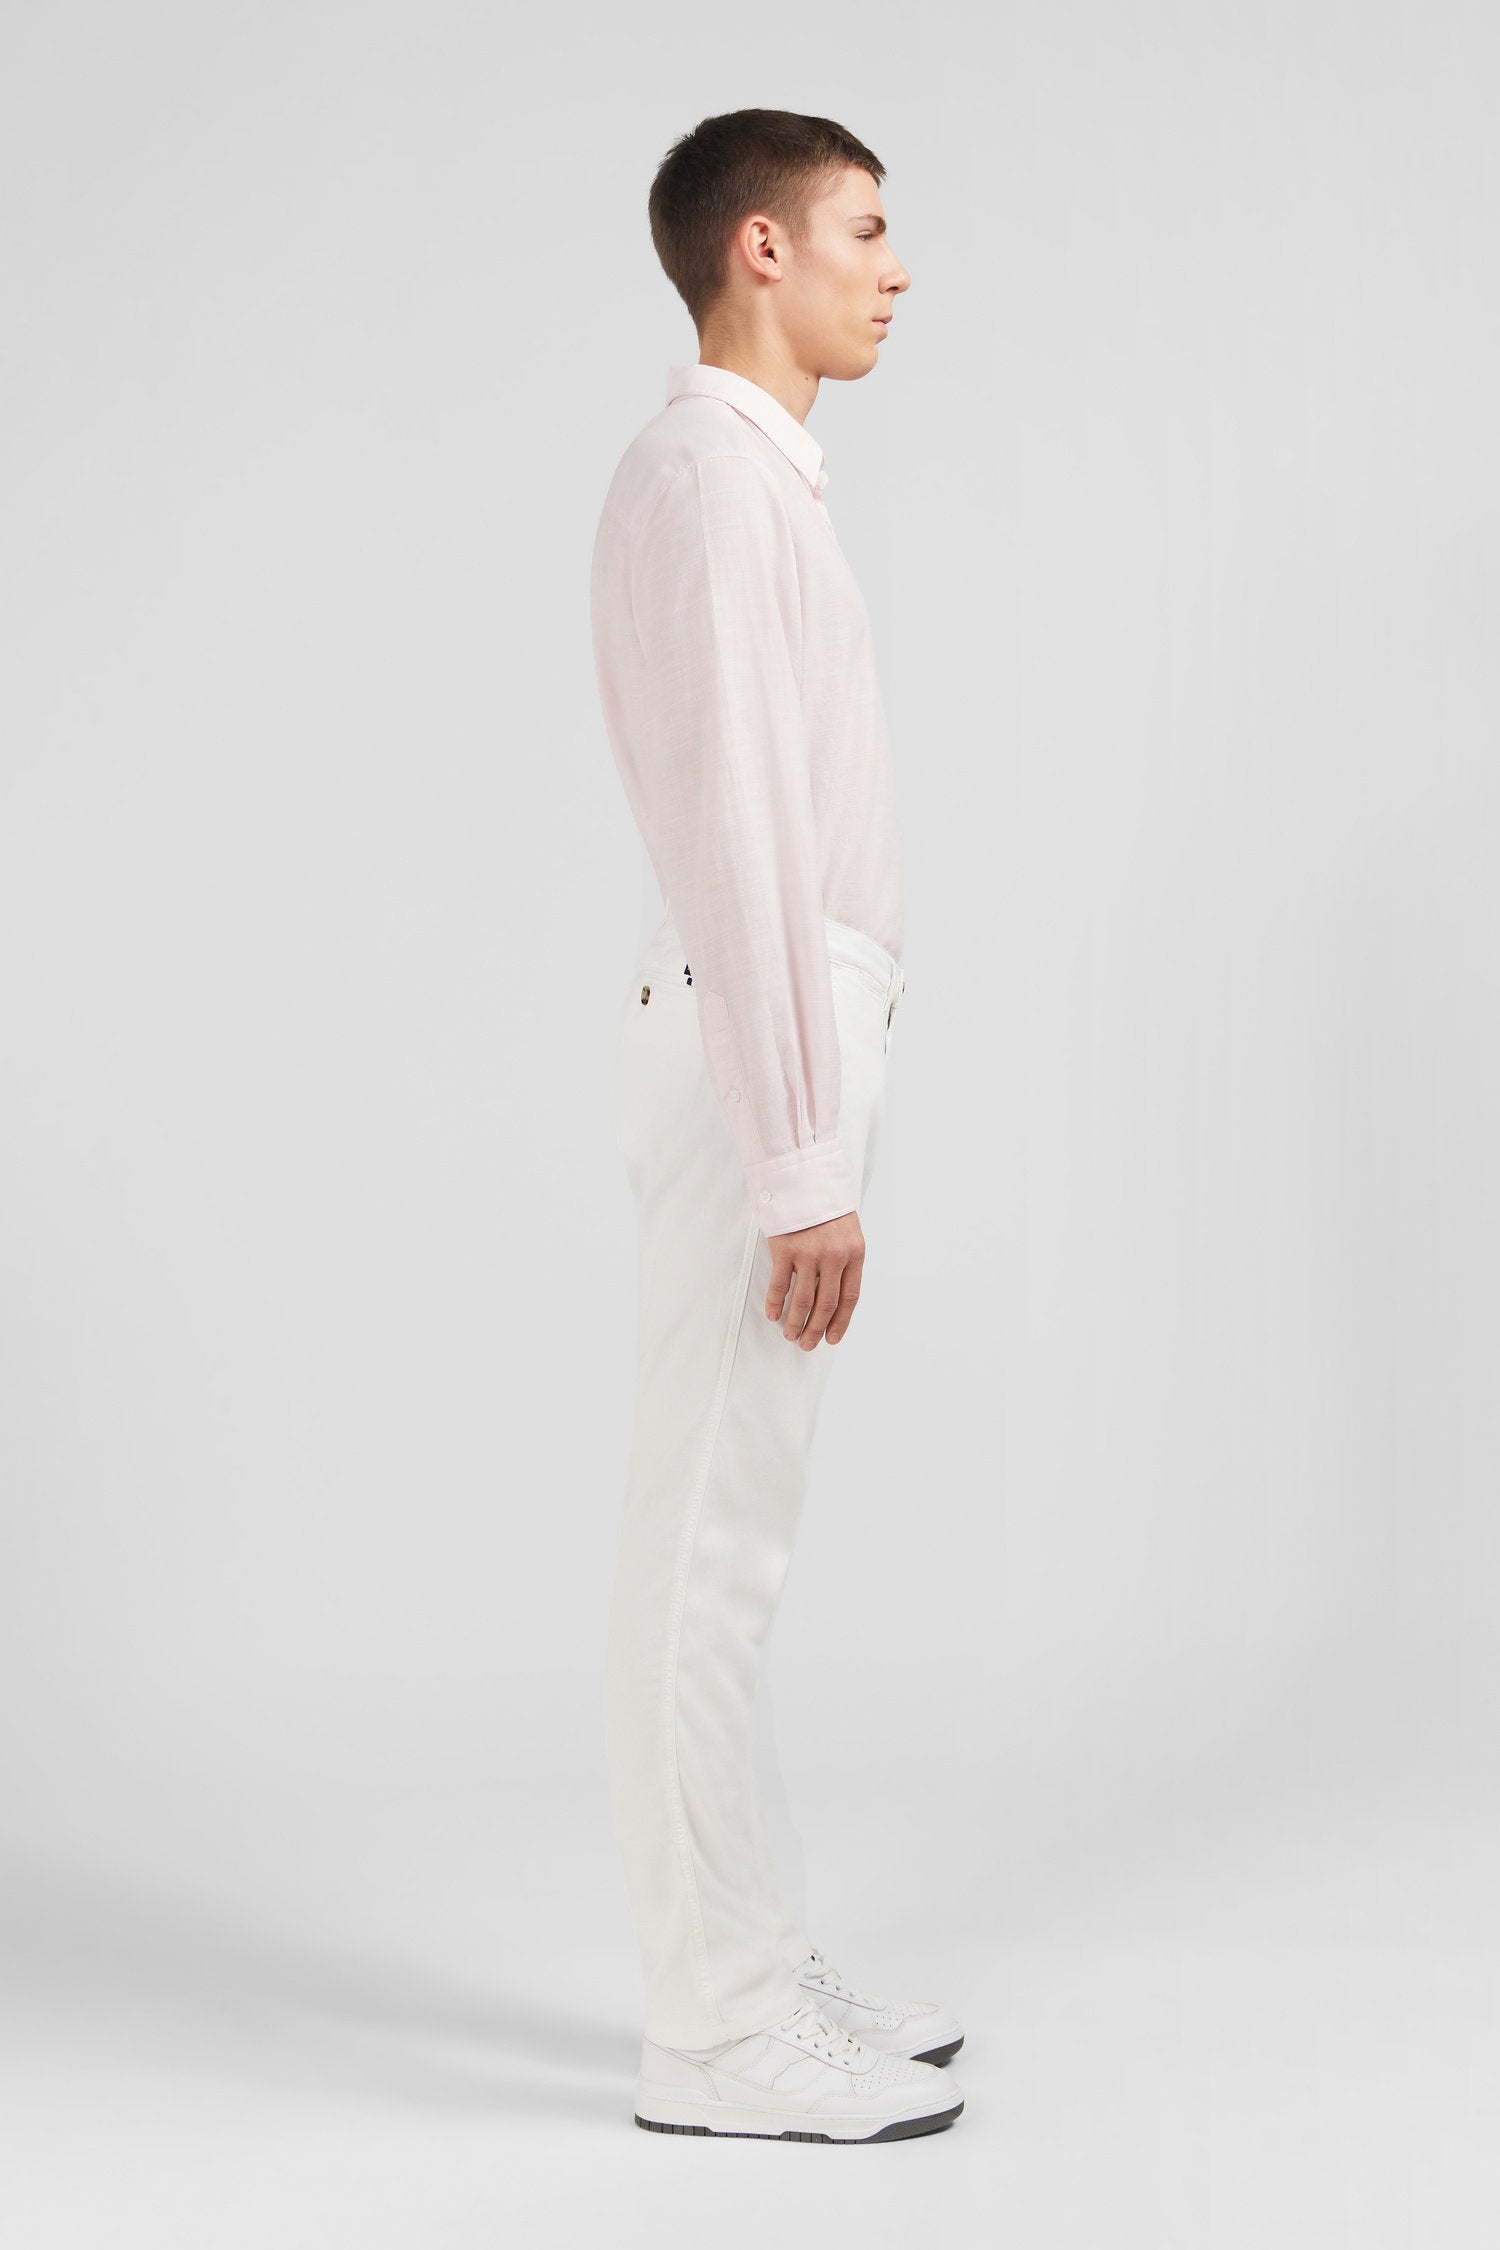 Plain Pink Shirt_E24Checl0018_Roc11_04